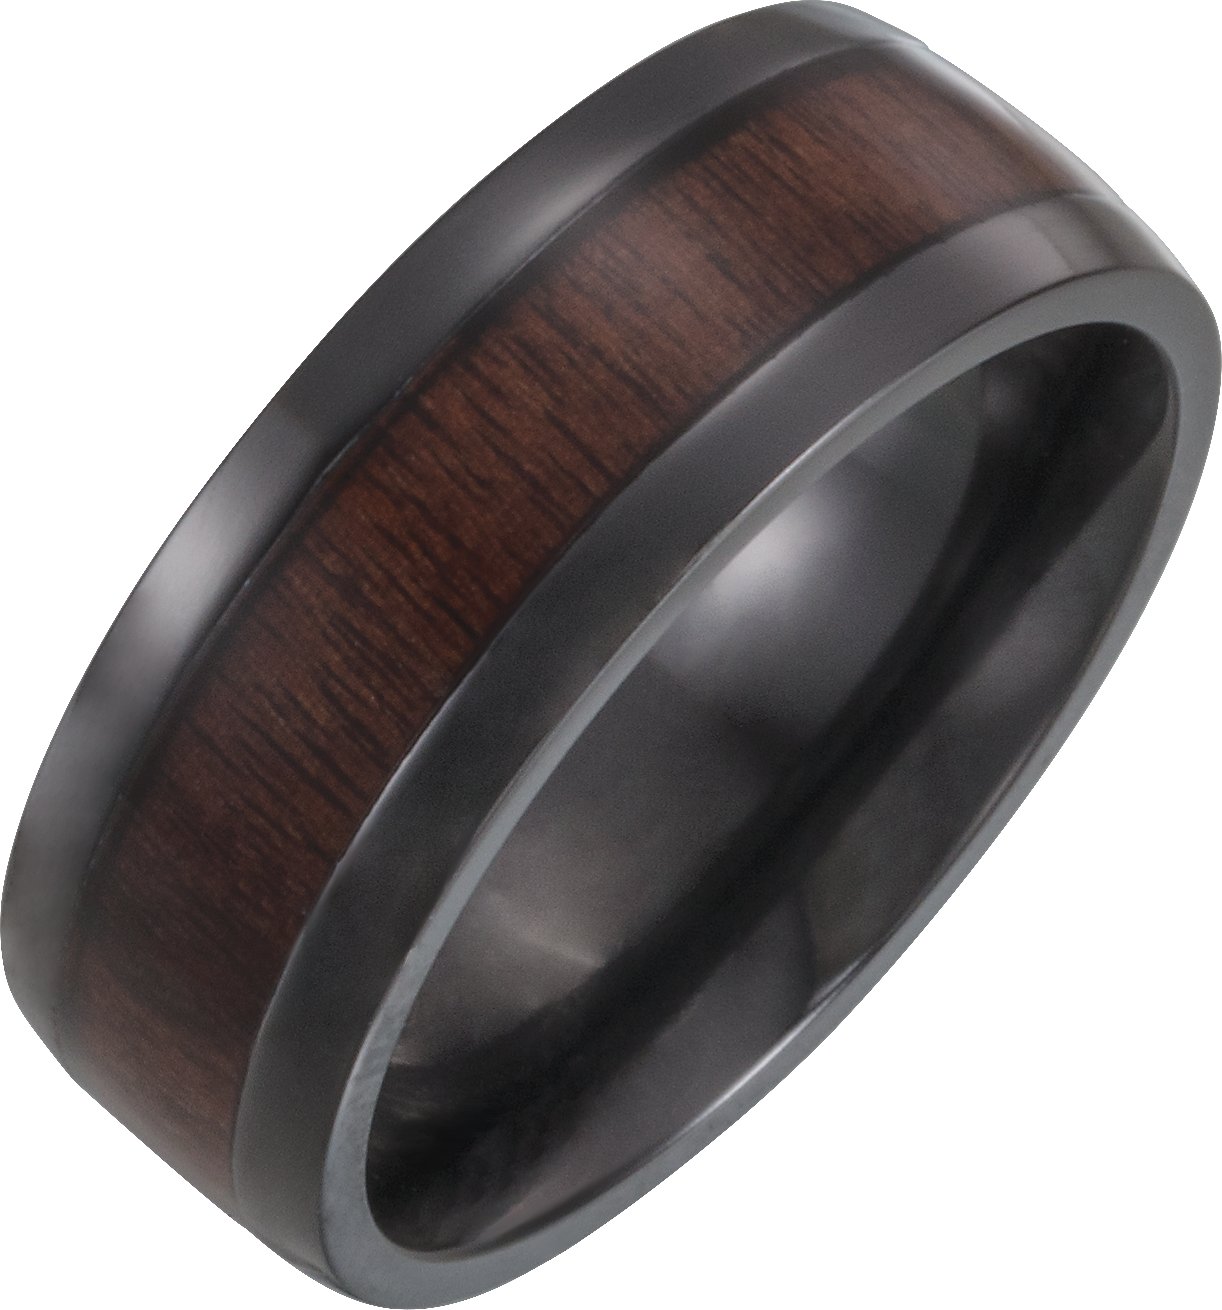 Black Titanium 8 mm Beveled Edge Band with Wood Inlay Size 13.5 Ref 16120558